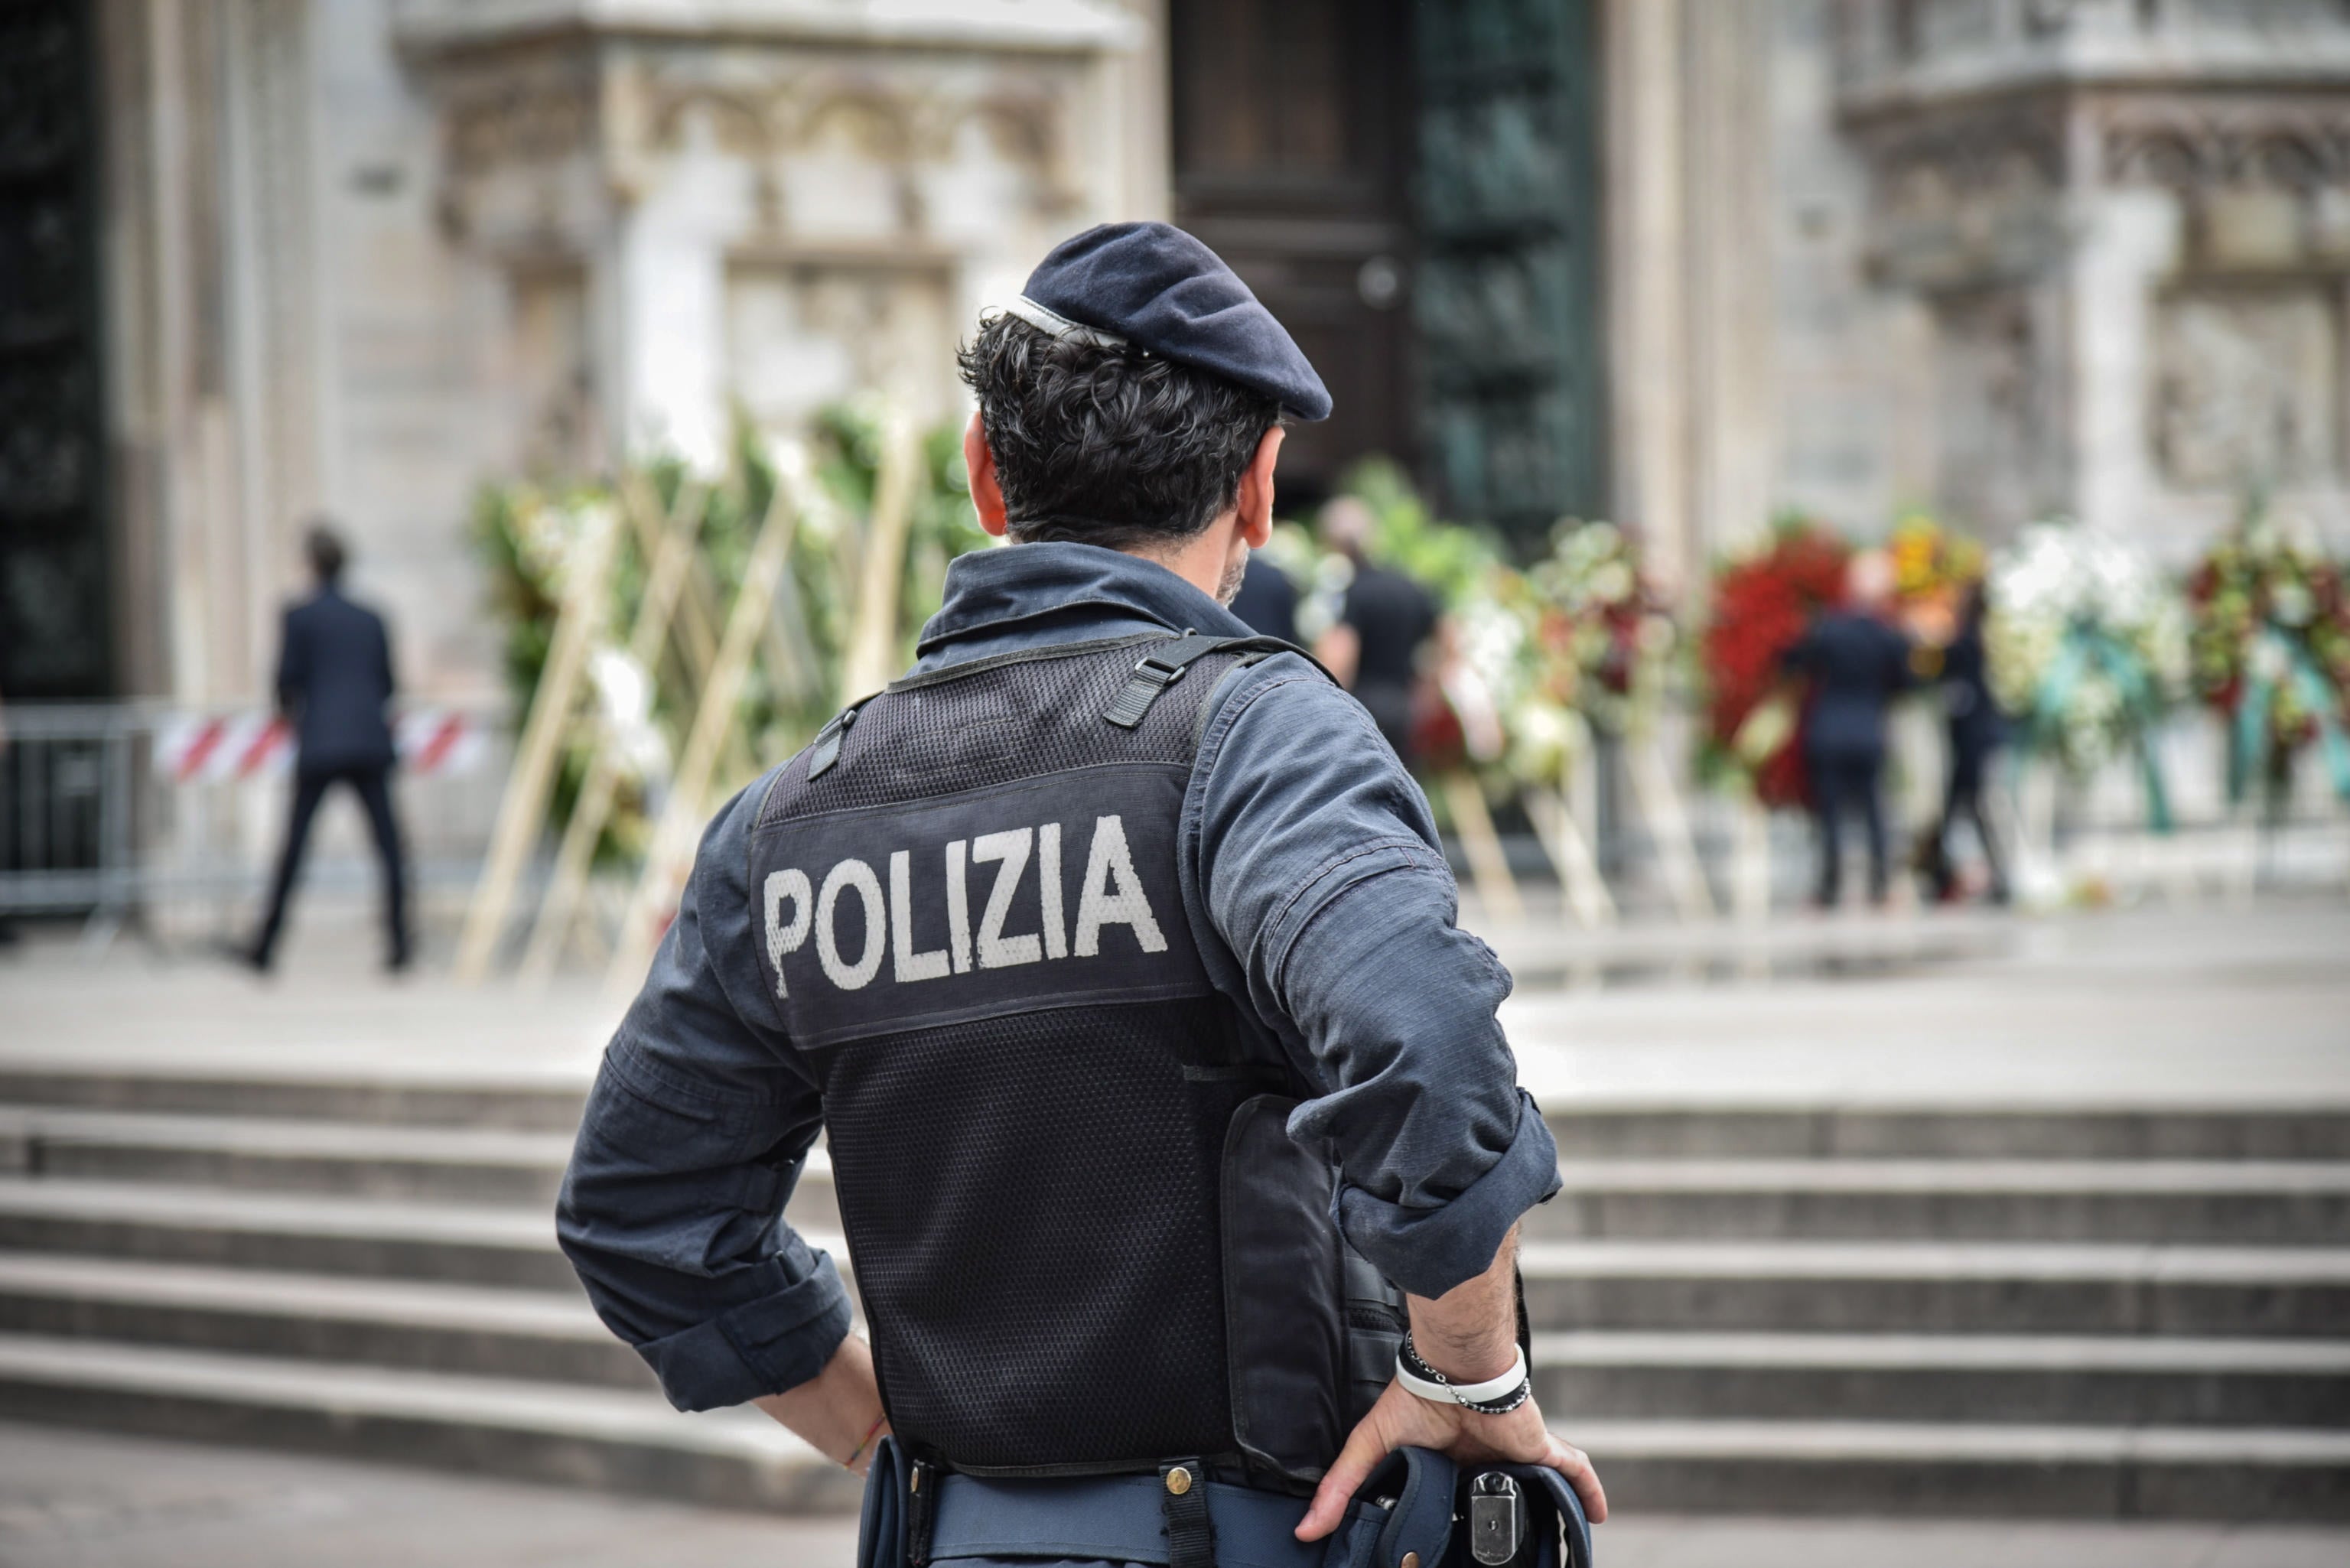 Representational: Italian authorities are investigating the cause of the blast